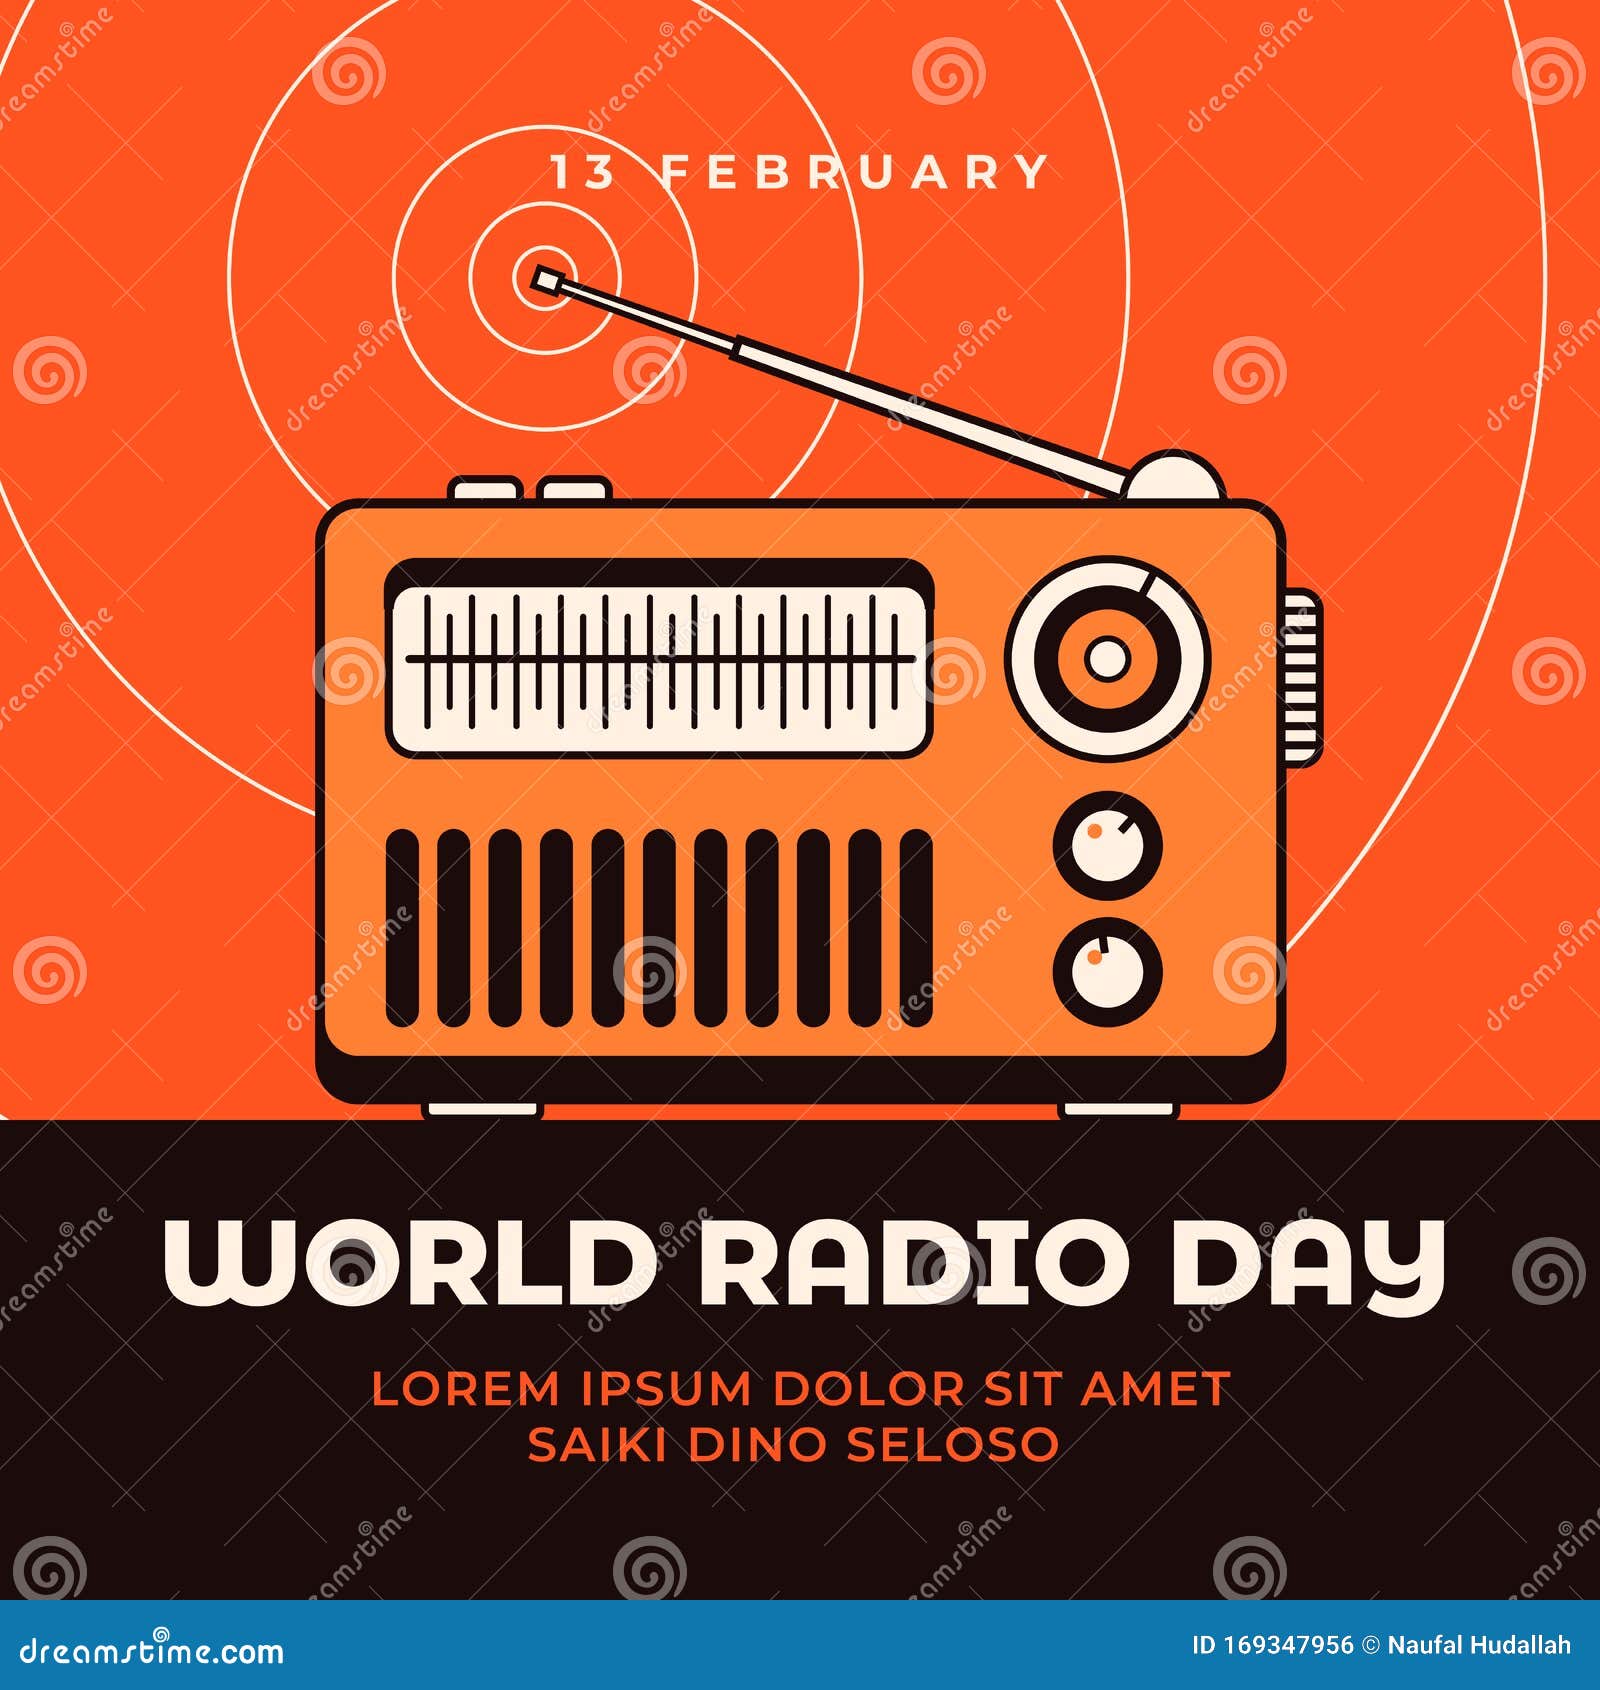 World Radio Day Vintage Retro Poster Background Design Vector Illustration  Stock Illustration - Illustration of night, sound: 169347956